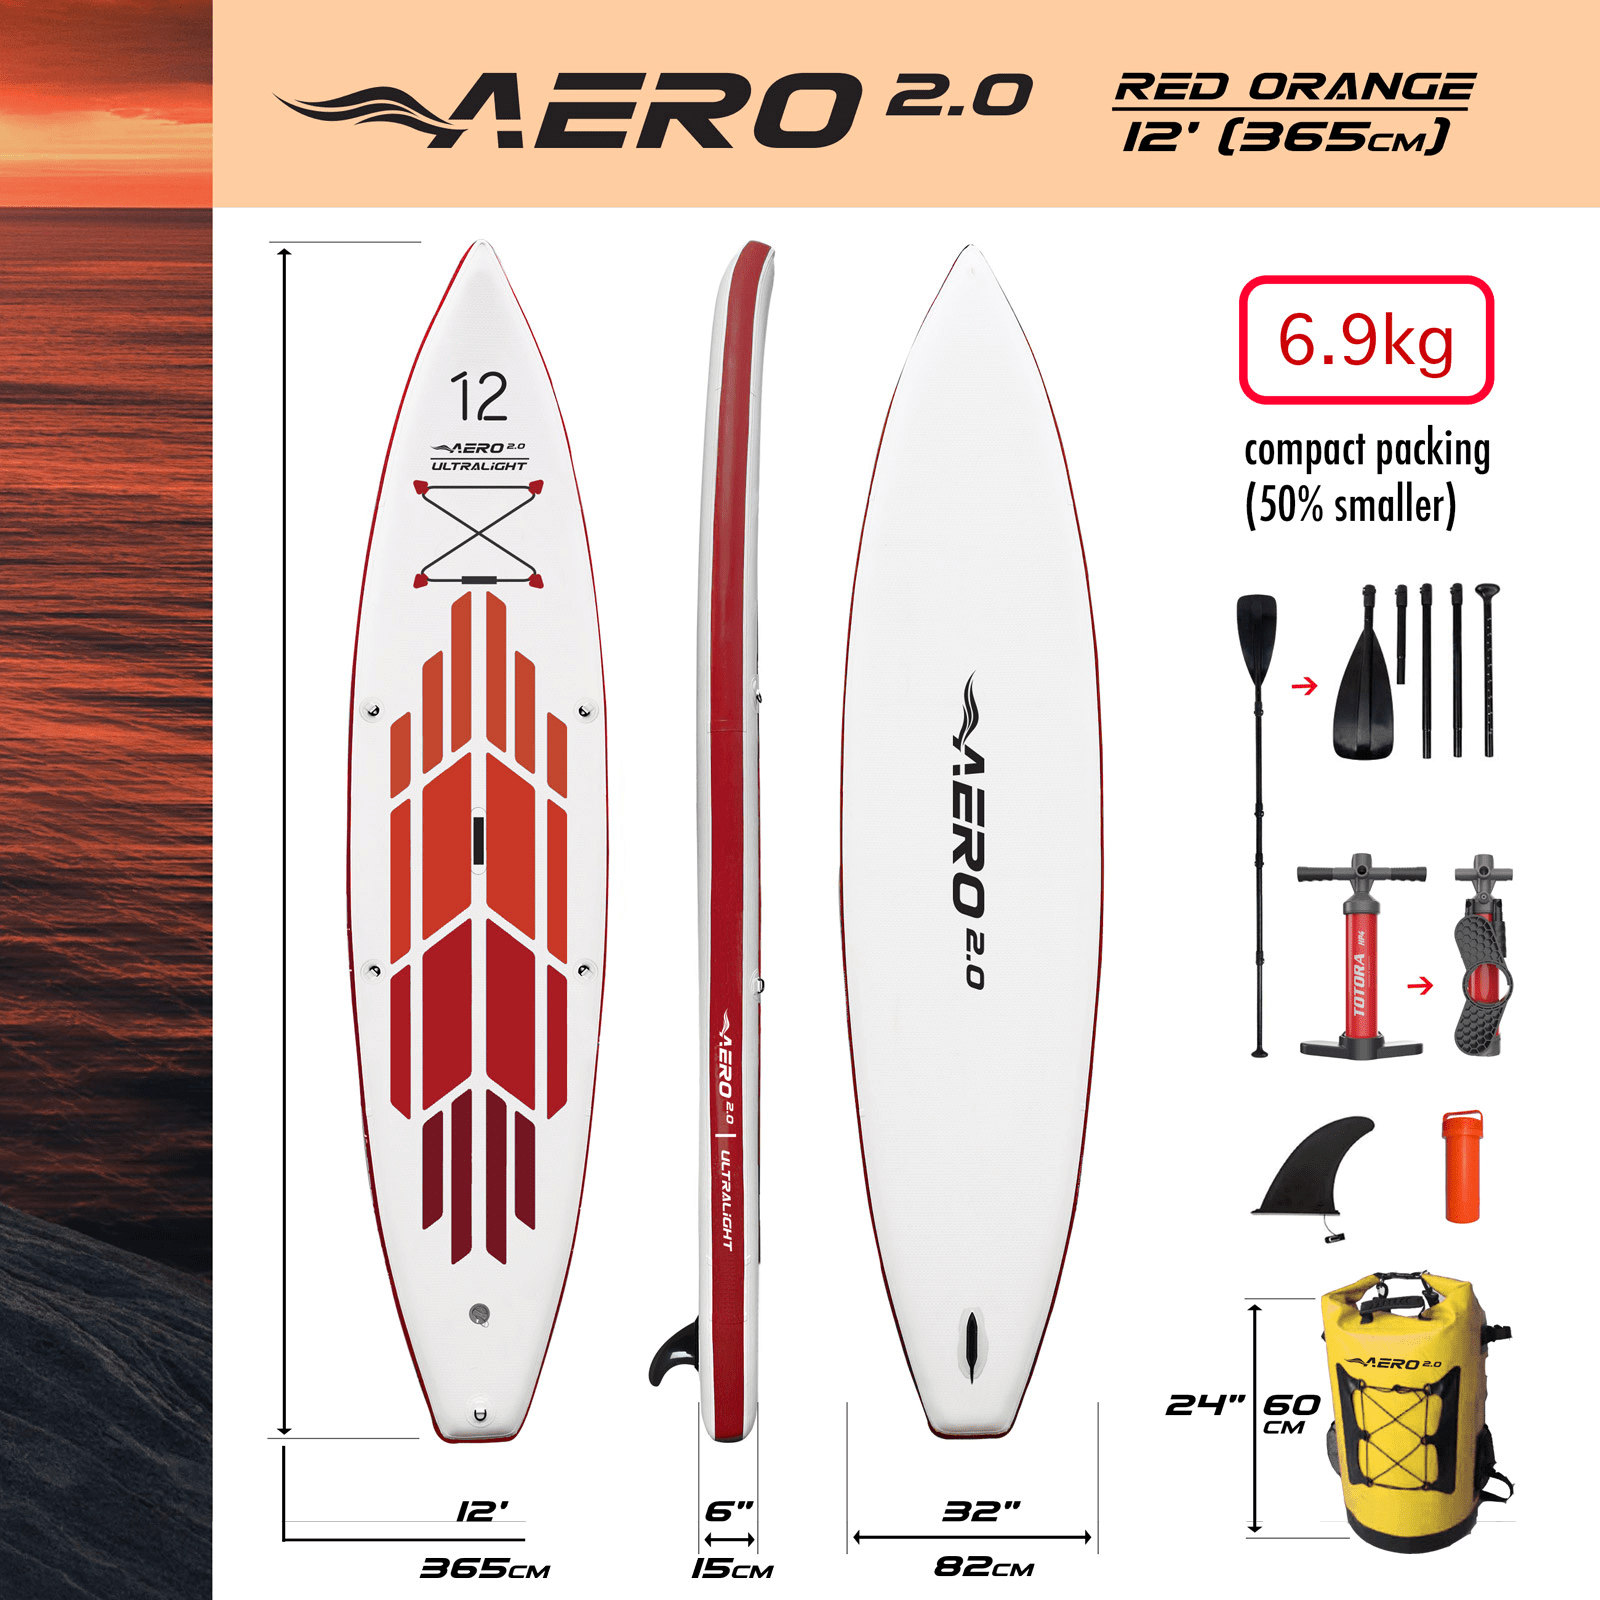 aero-20-red-orange-12-ultralight-sup-board-complekt